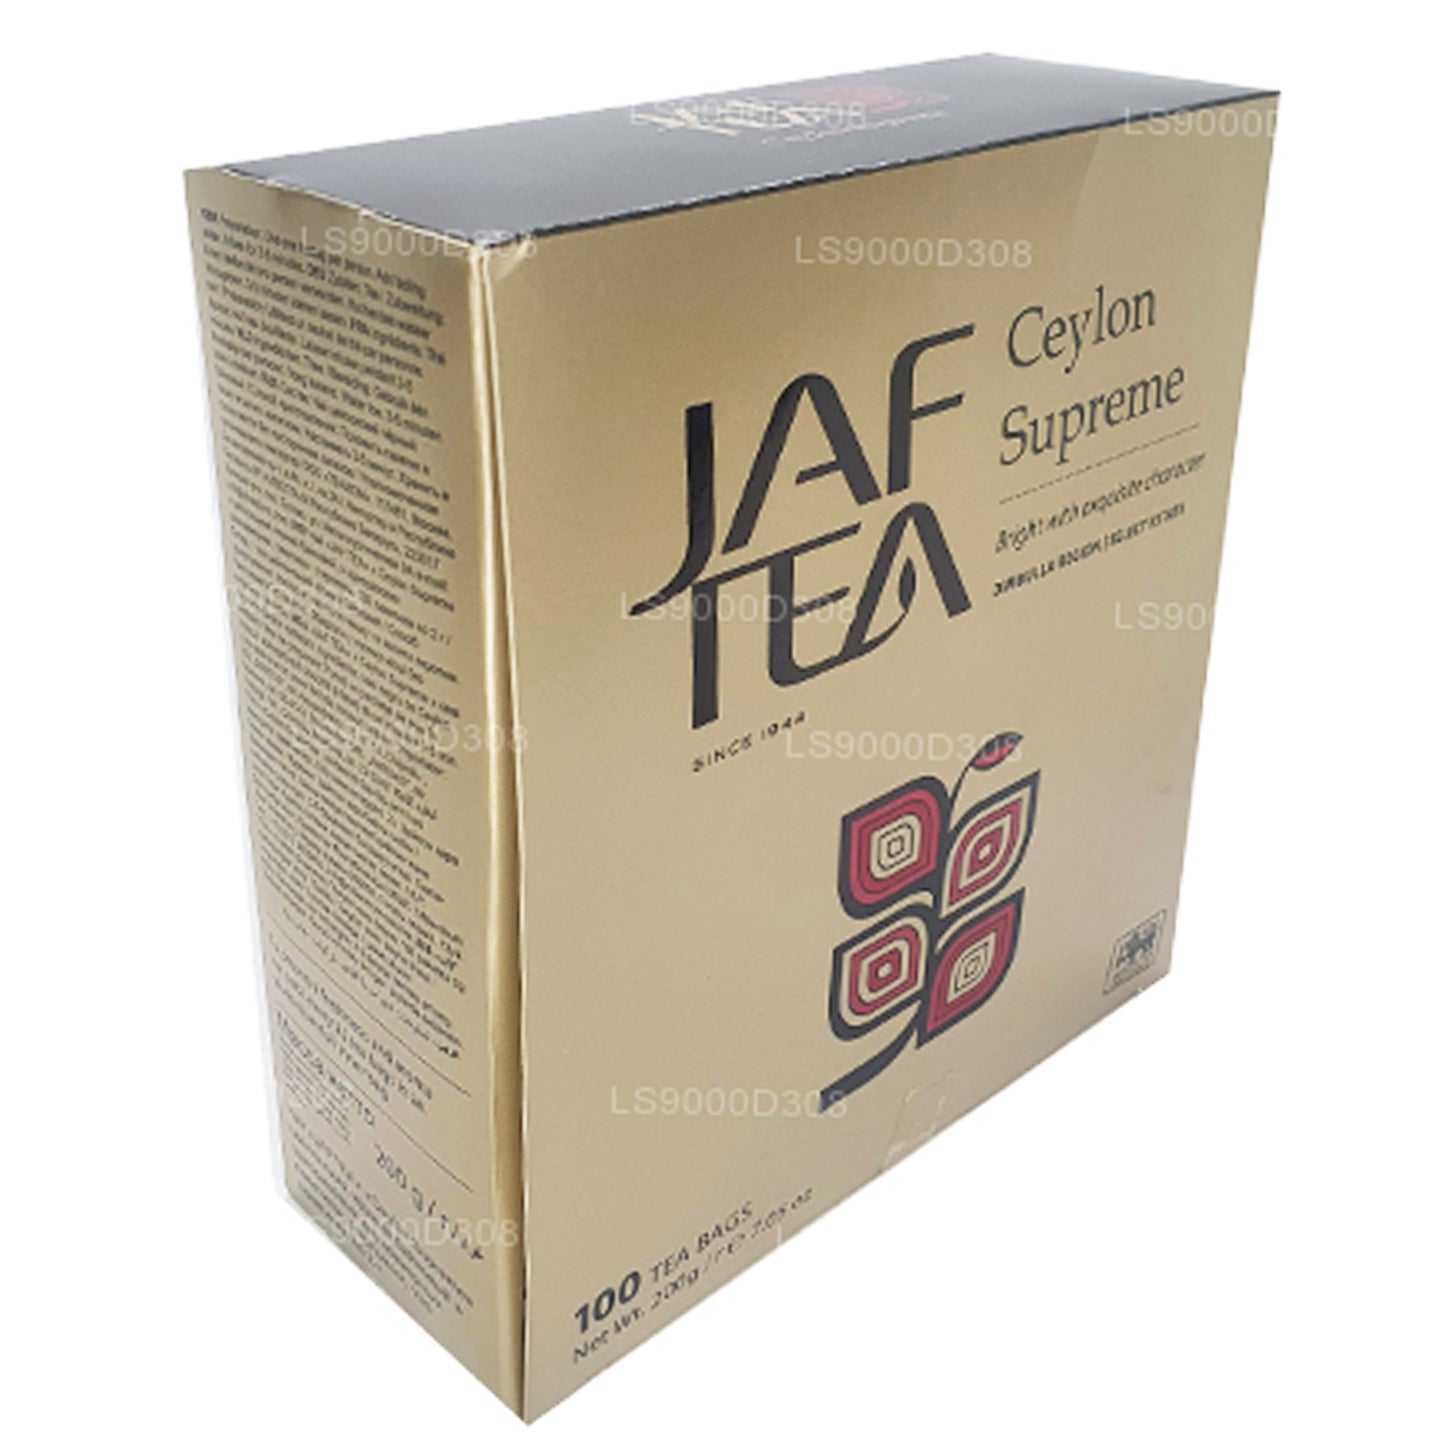 Jaf Tea Classic Gold Collection Ceylon Supreme 100 茶包绳子和标签